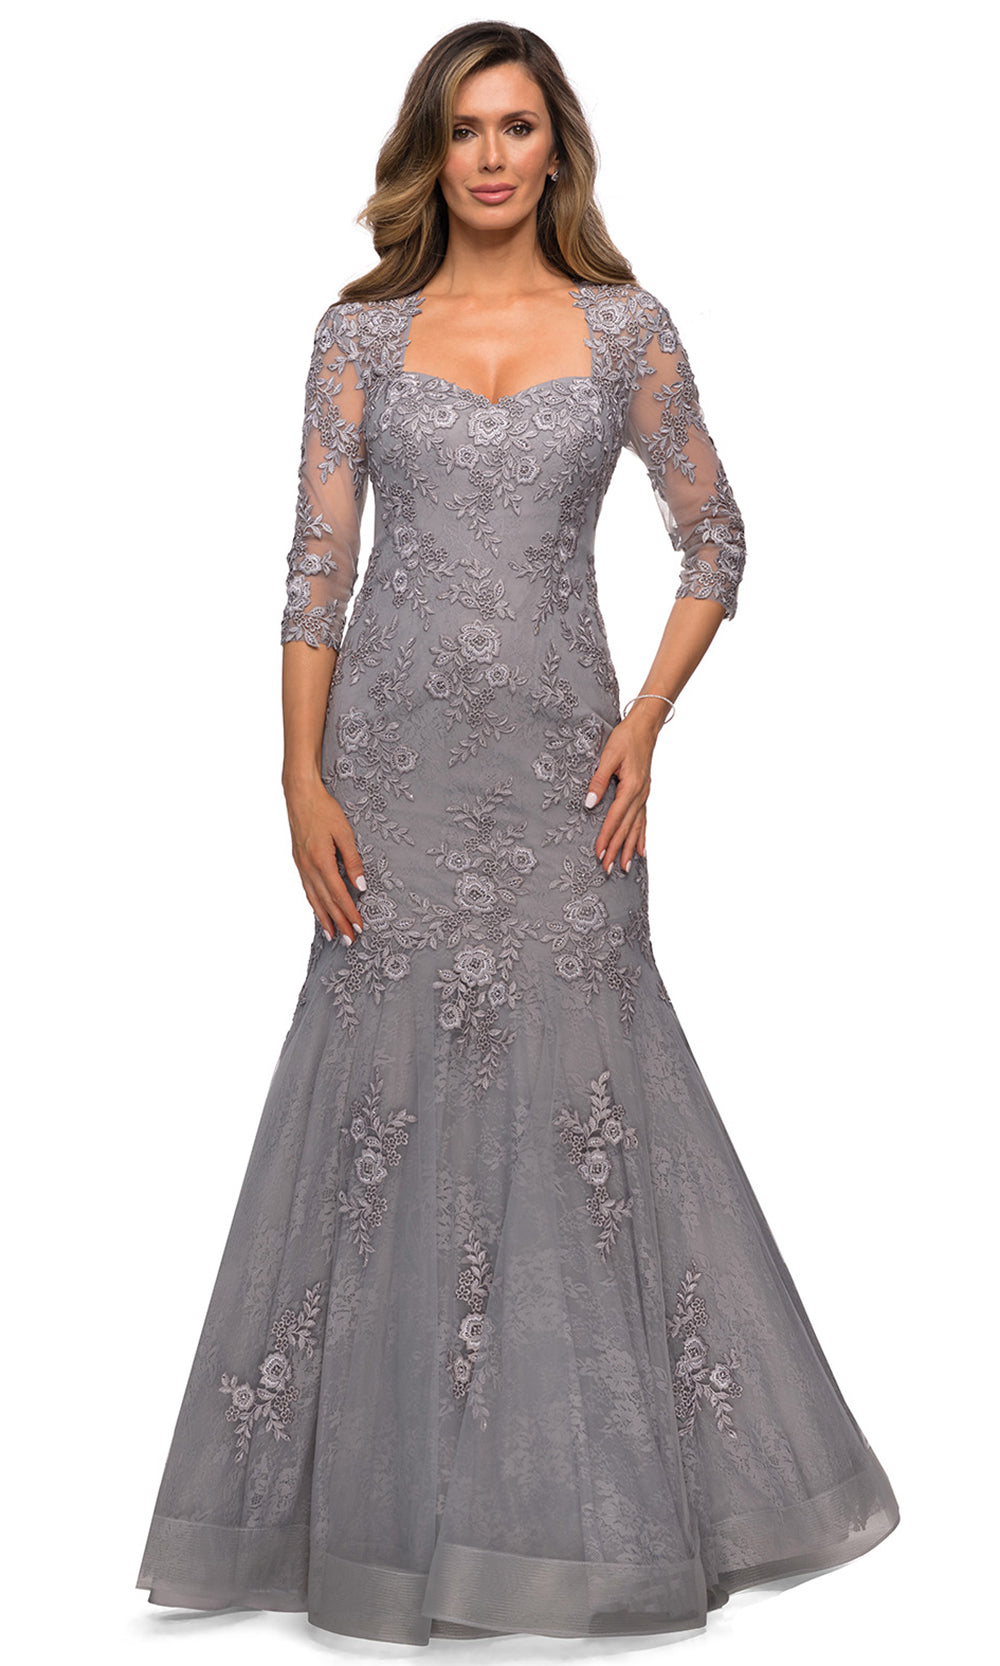 La Femme - 28033 Square Neckline Lace Embroidery Mermaid Formal Dress In Silver & Gray